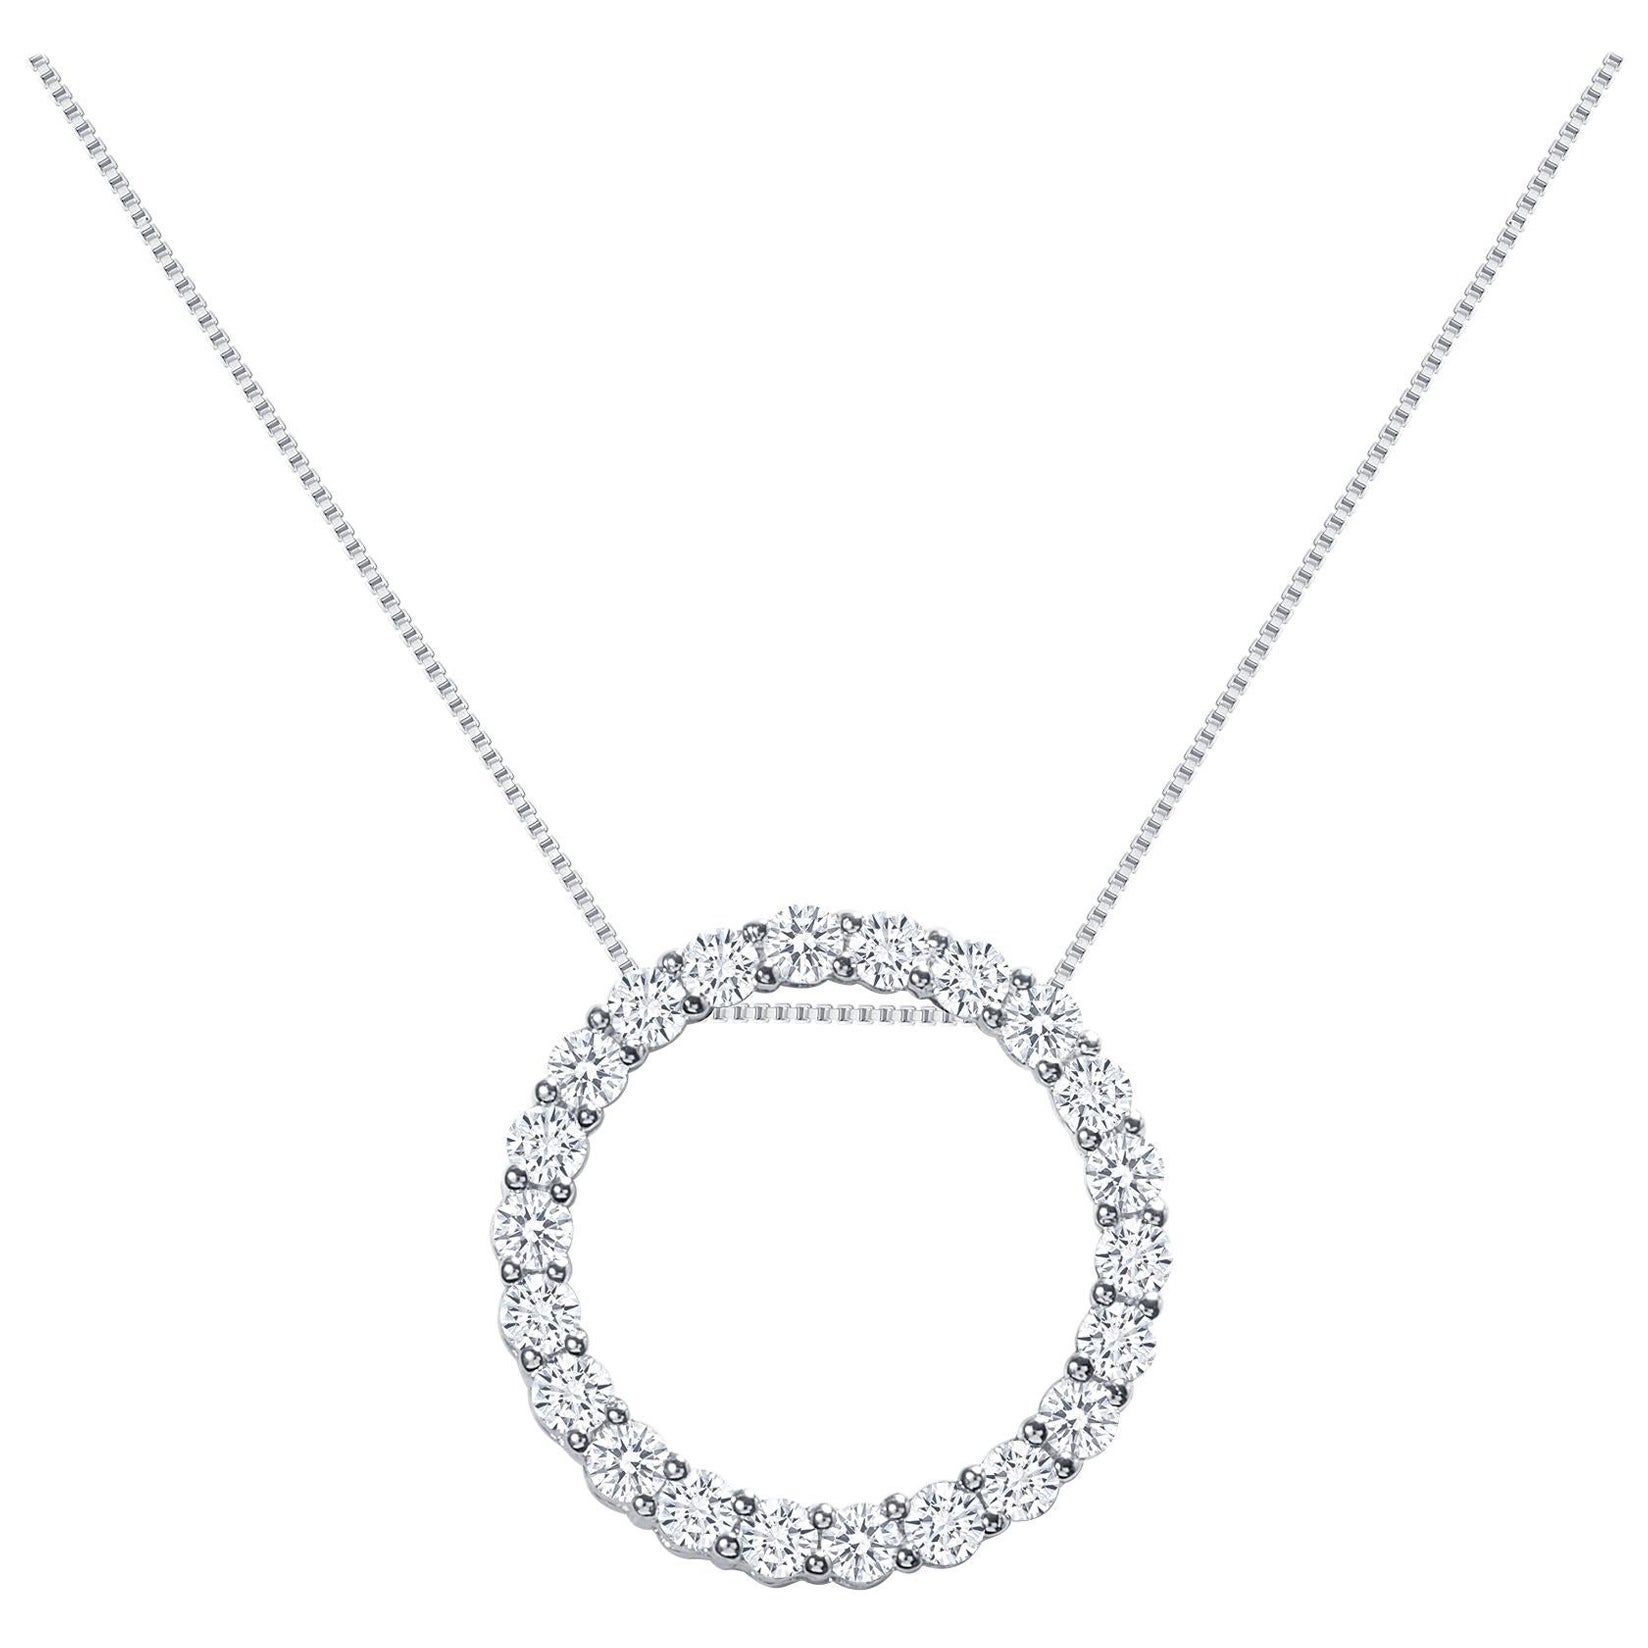 Collier à pendentif circulaire en or blanc 14 carats avec diamants ronds naturels de 2 carats